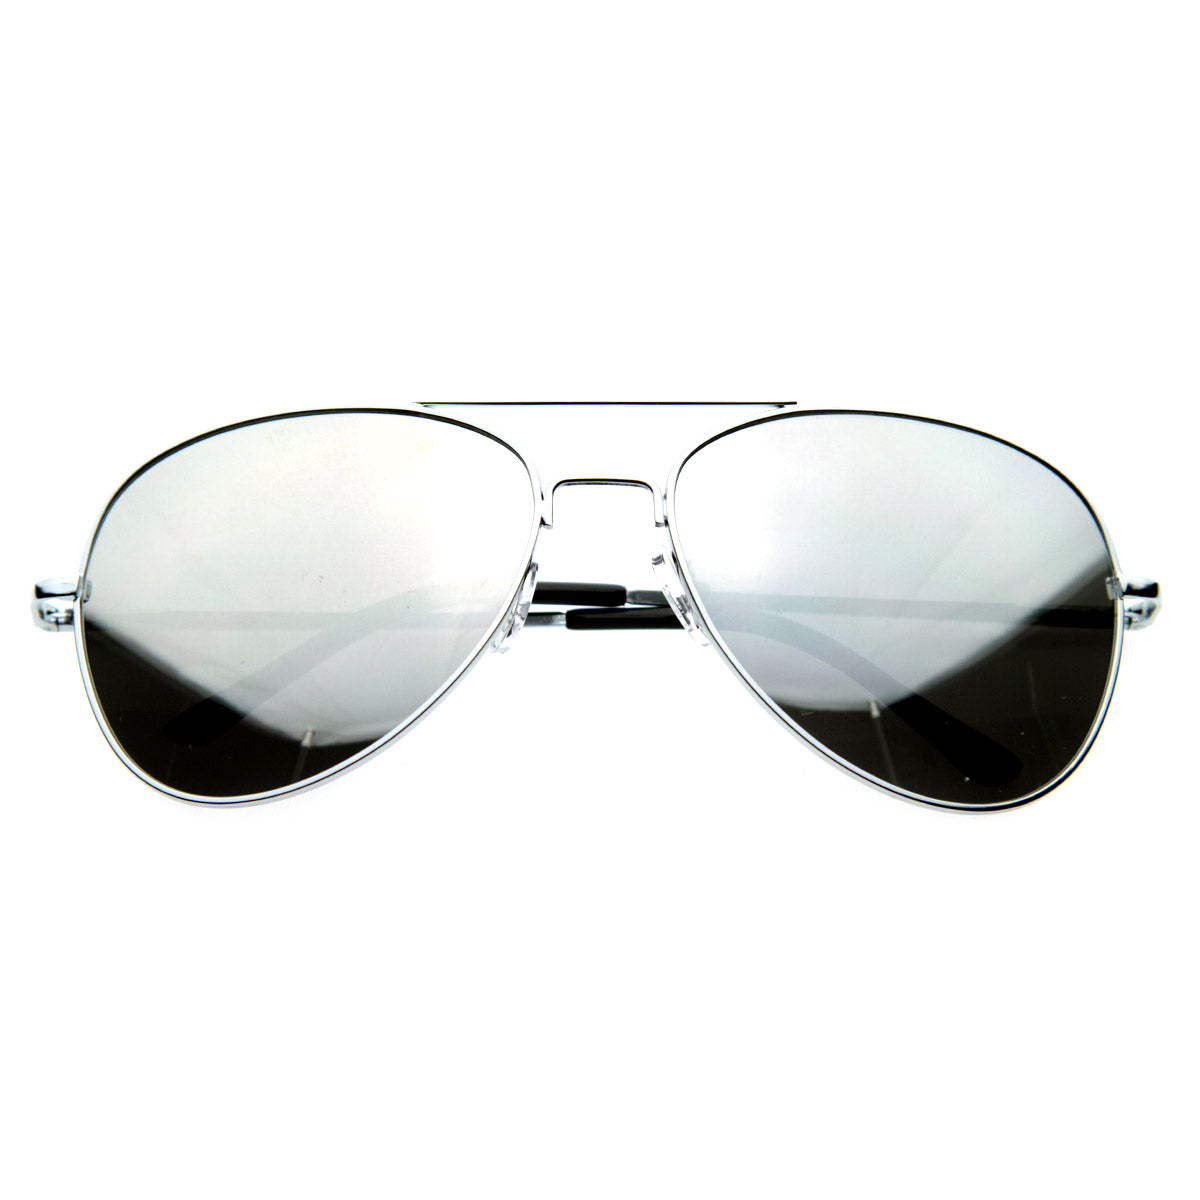 Premium Mirrored Aviator Top Gun Sunglasses w/ Spring Loaded Temples 